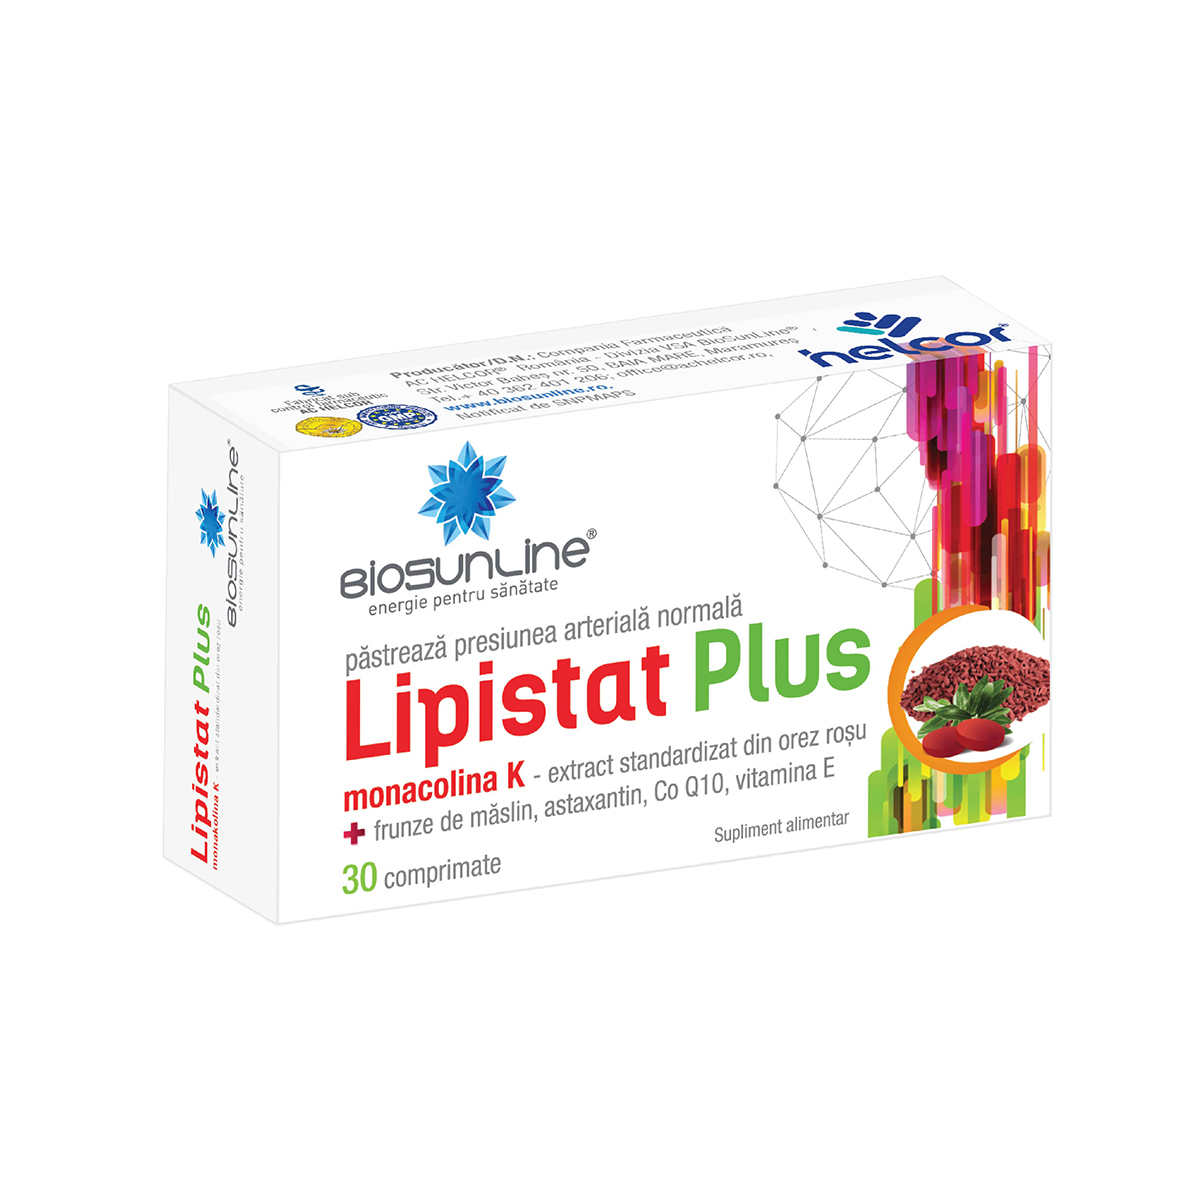 Lipistat Plus, 30 comprimate, Biosunline